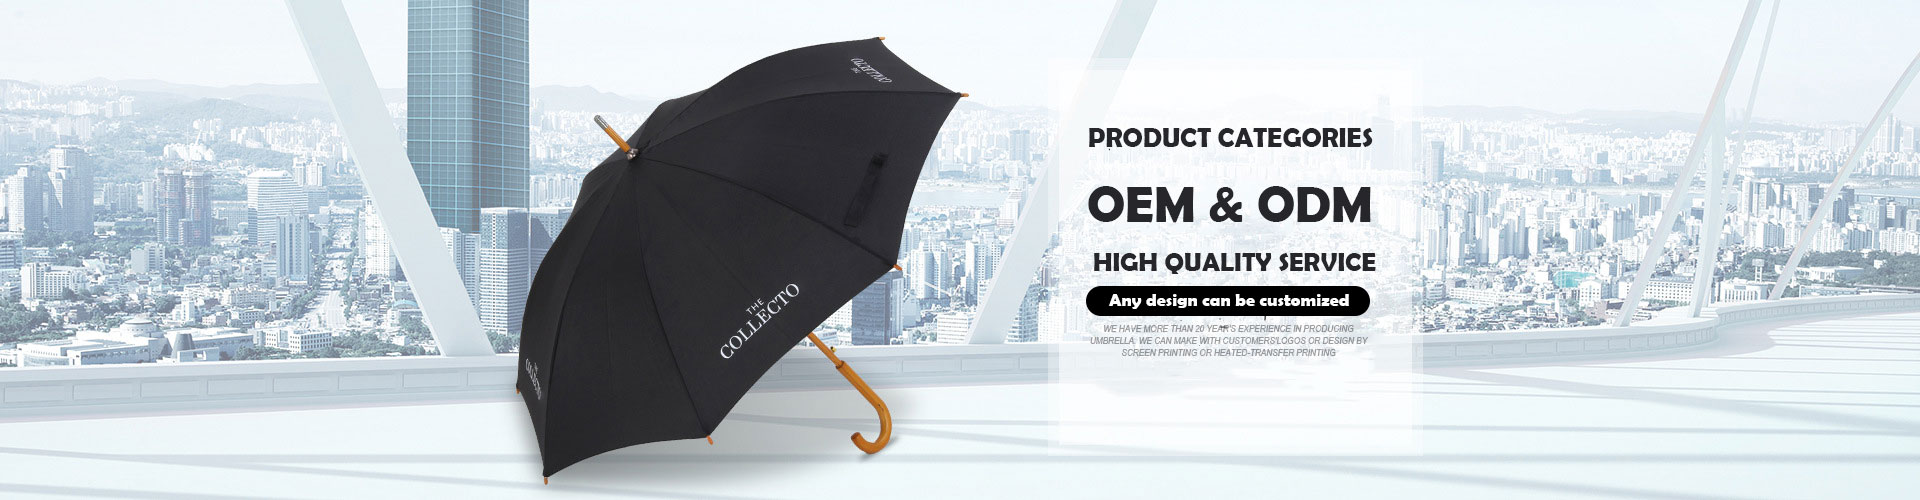 Umbrella Product